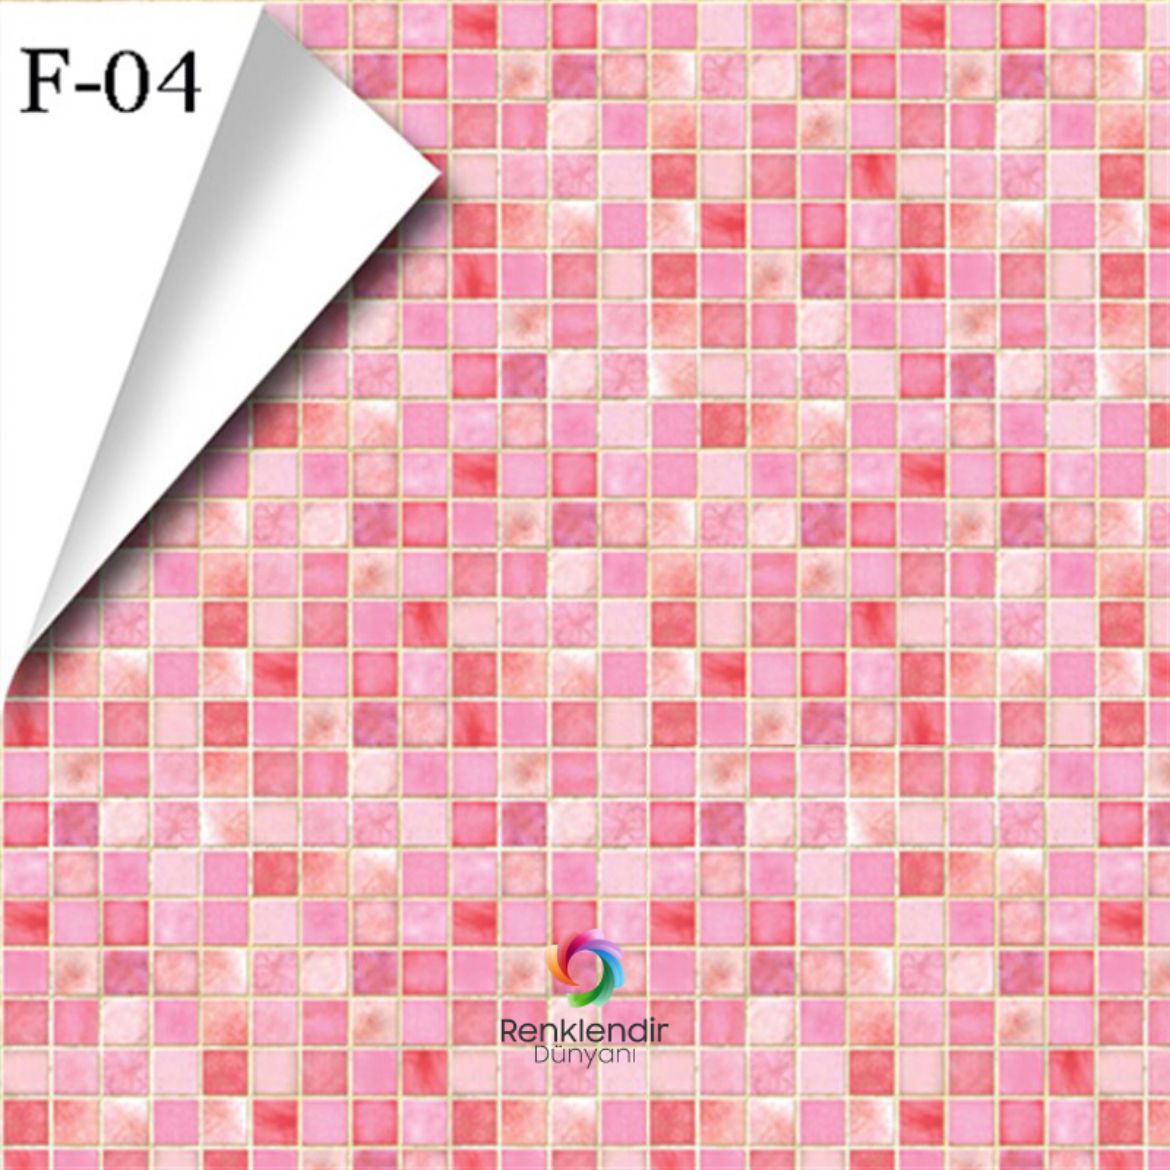 Renkli Tezgah Arası Folyo F-04 resmi